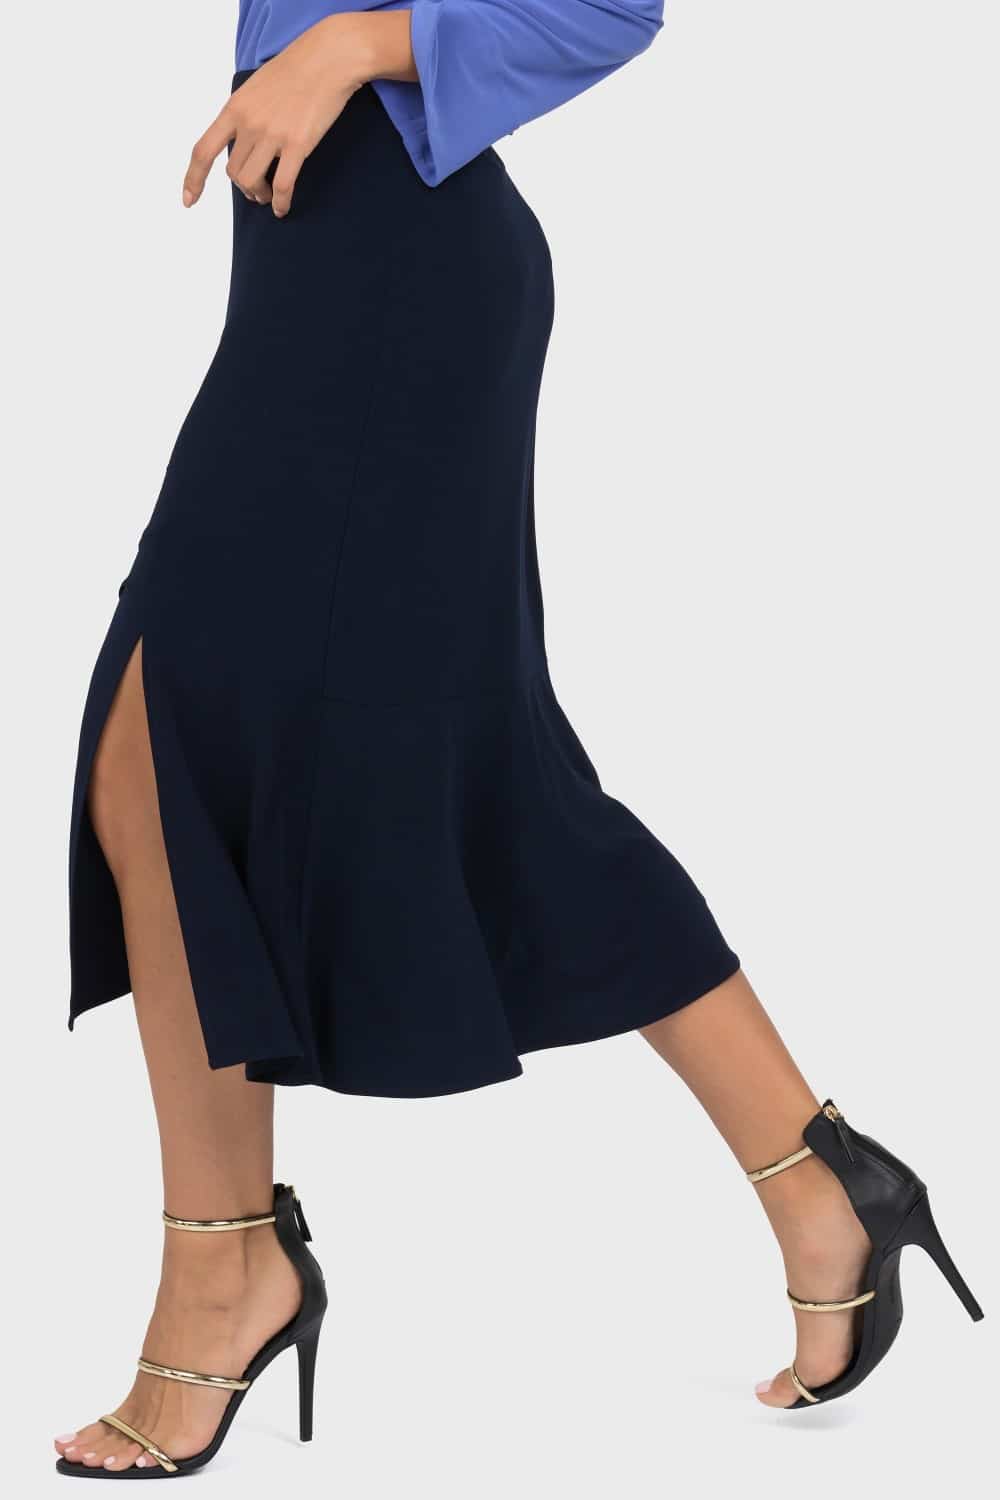 Joseph Ribkoff Skirt Style 191091 Blue Or Black Belle Mia Boutique